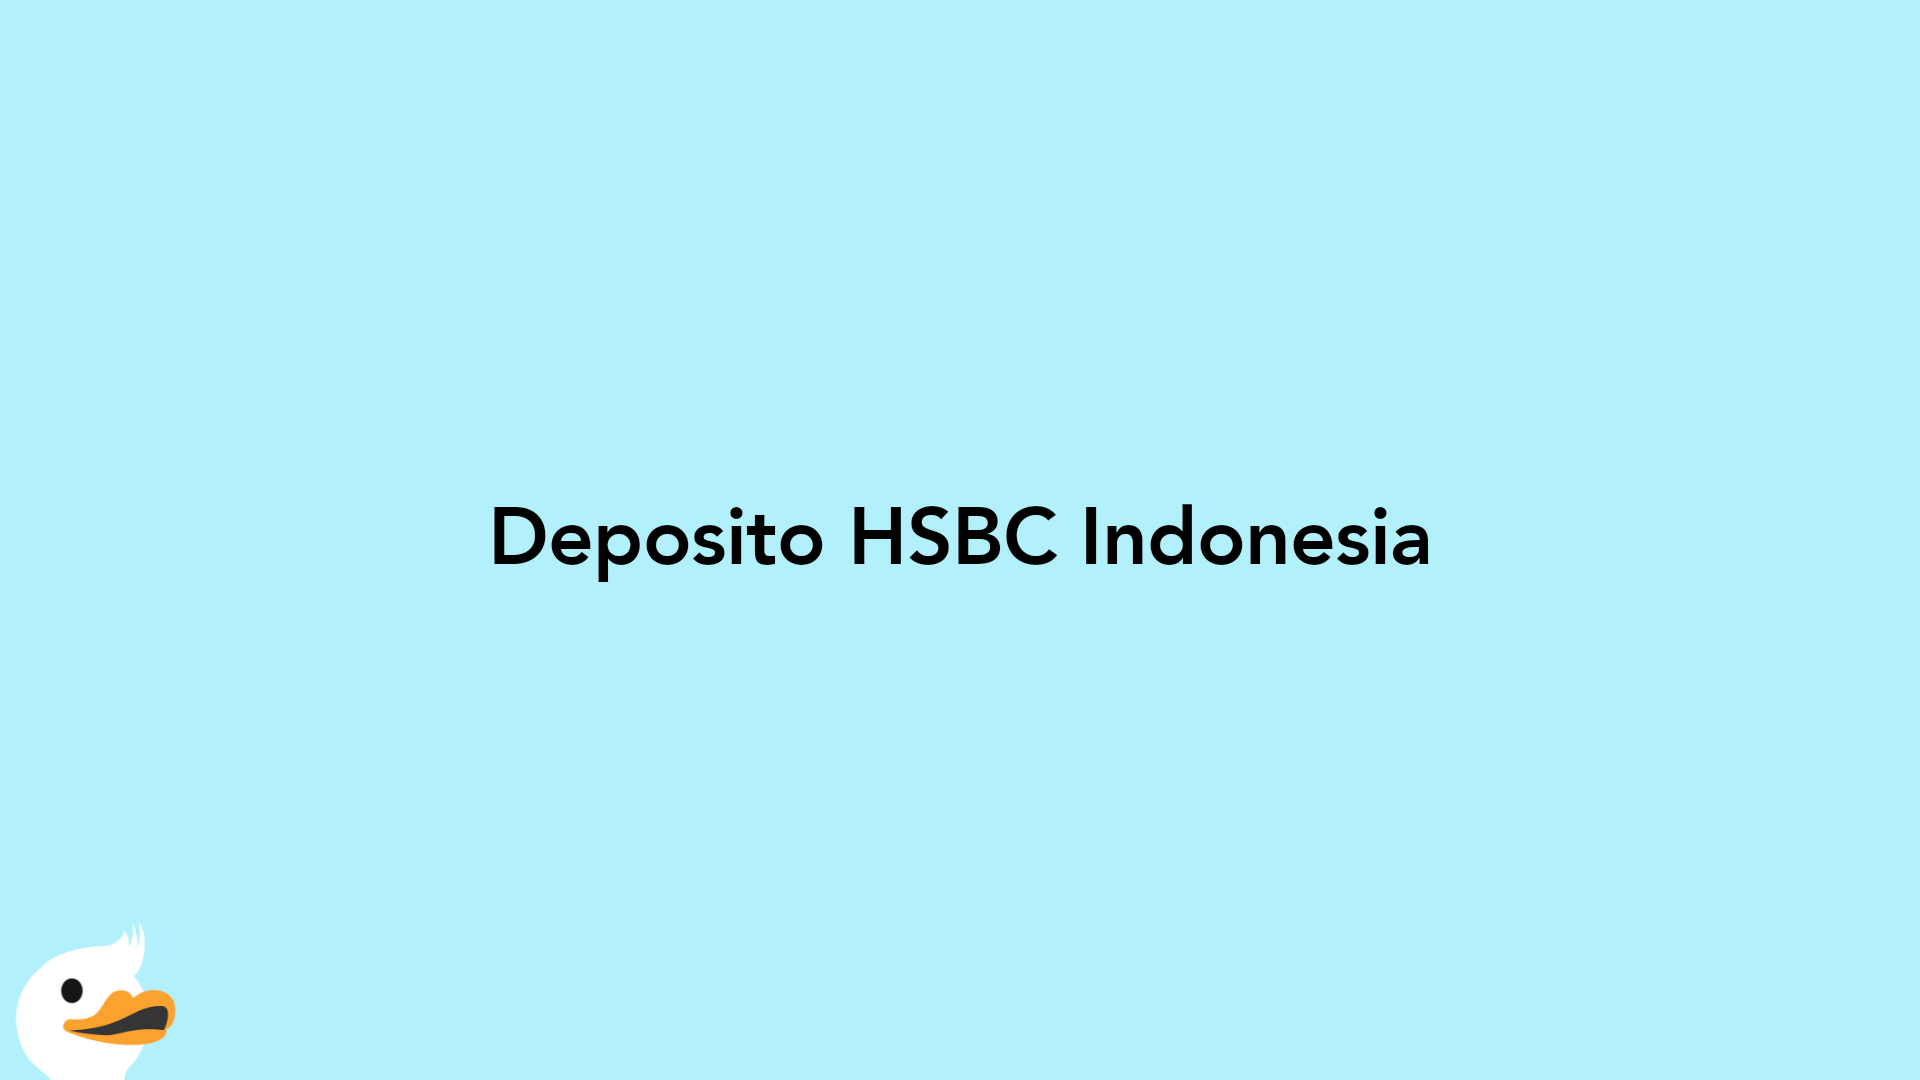 Deposito HSBC Indonesia